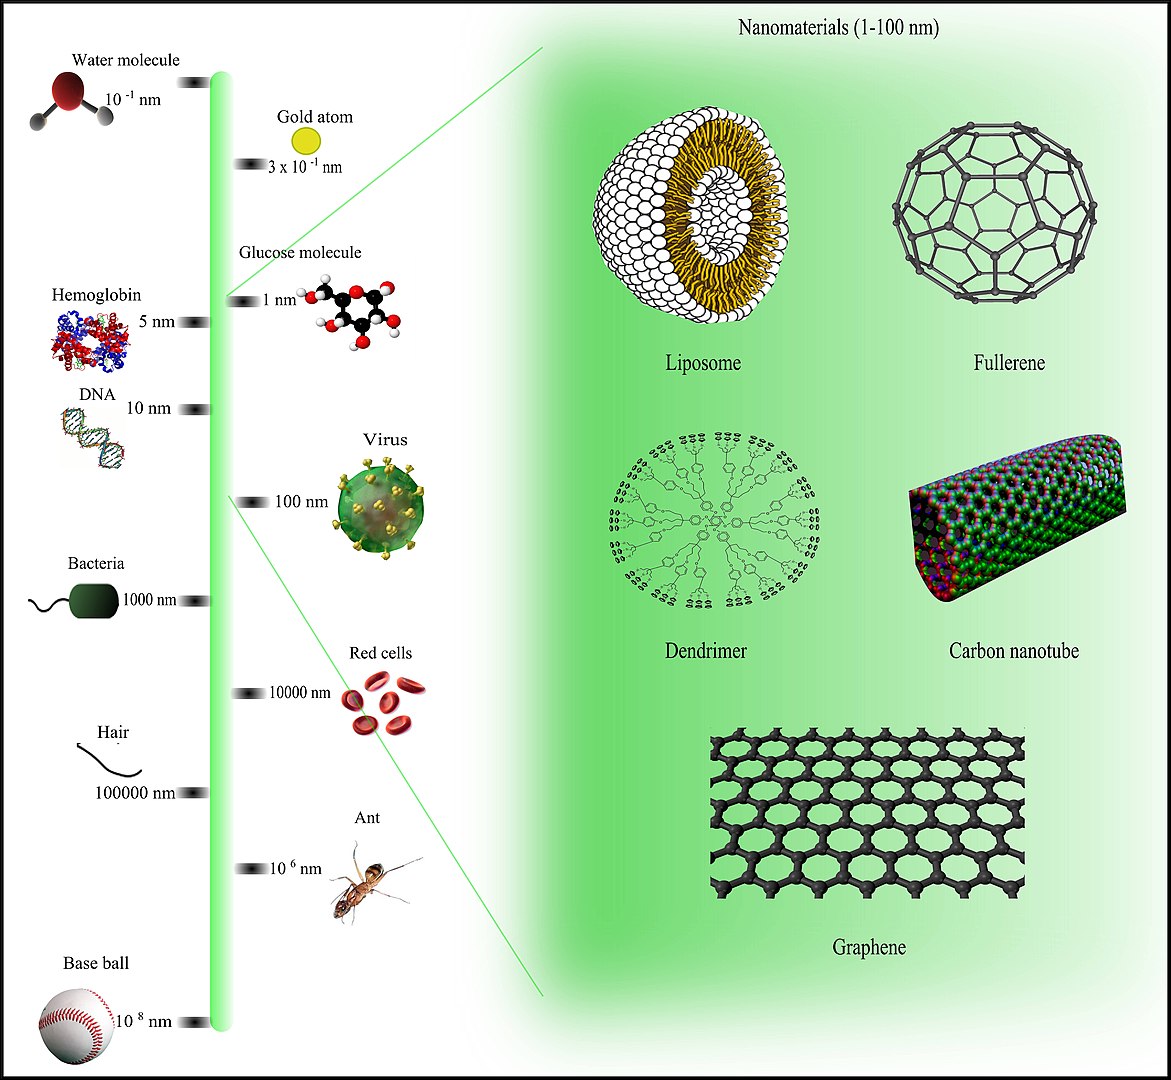 Comparison of Nanomaterials Sizes